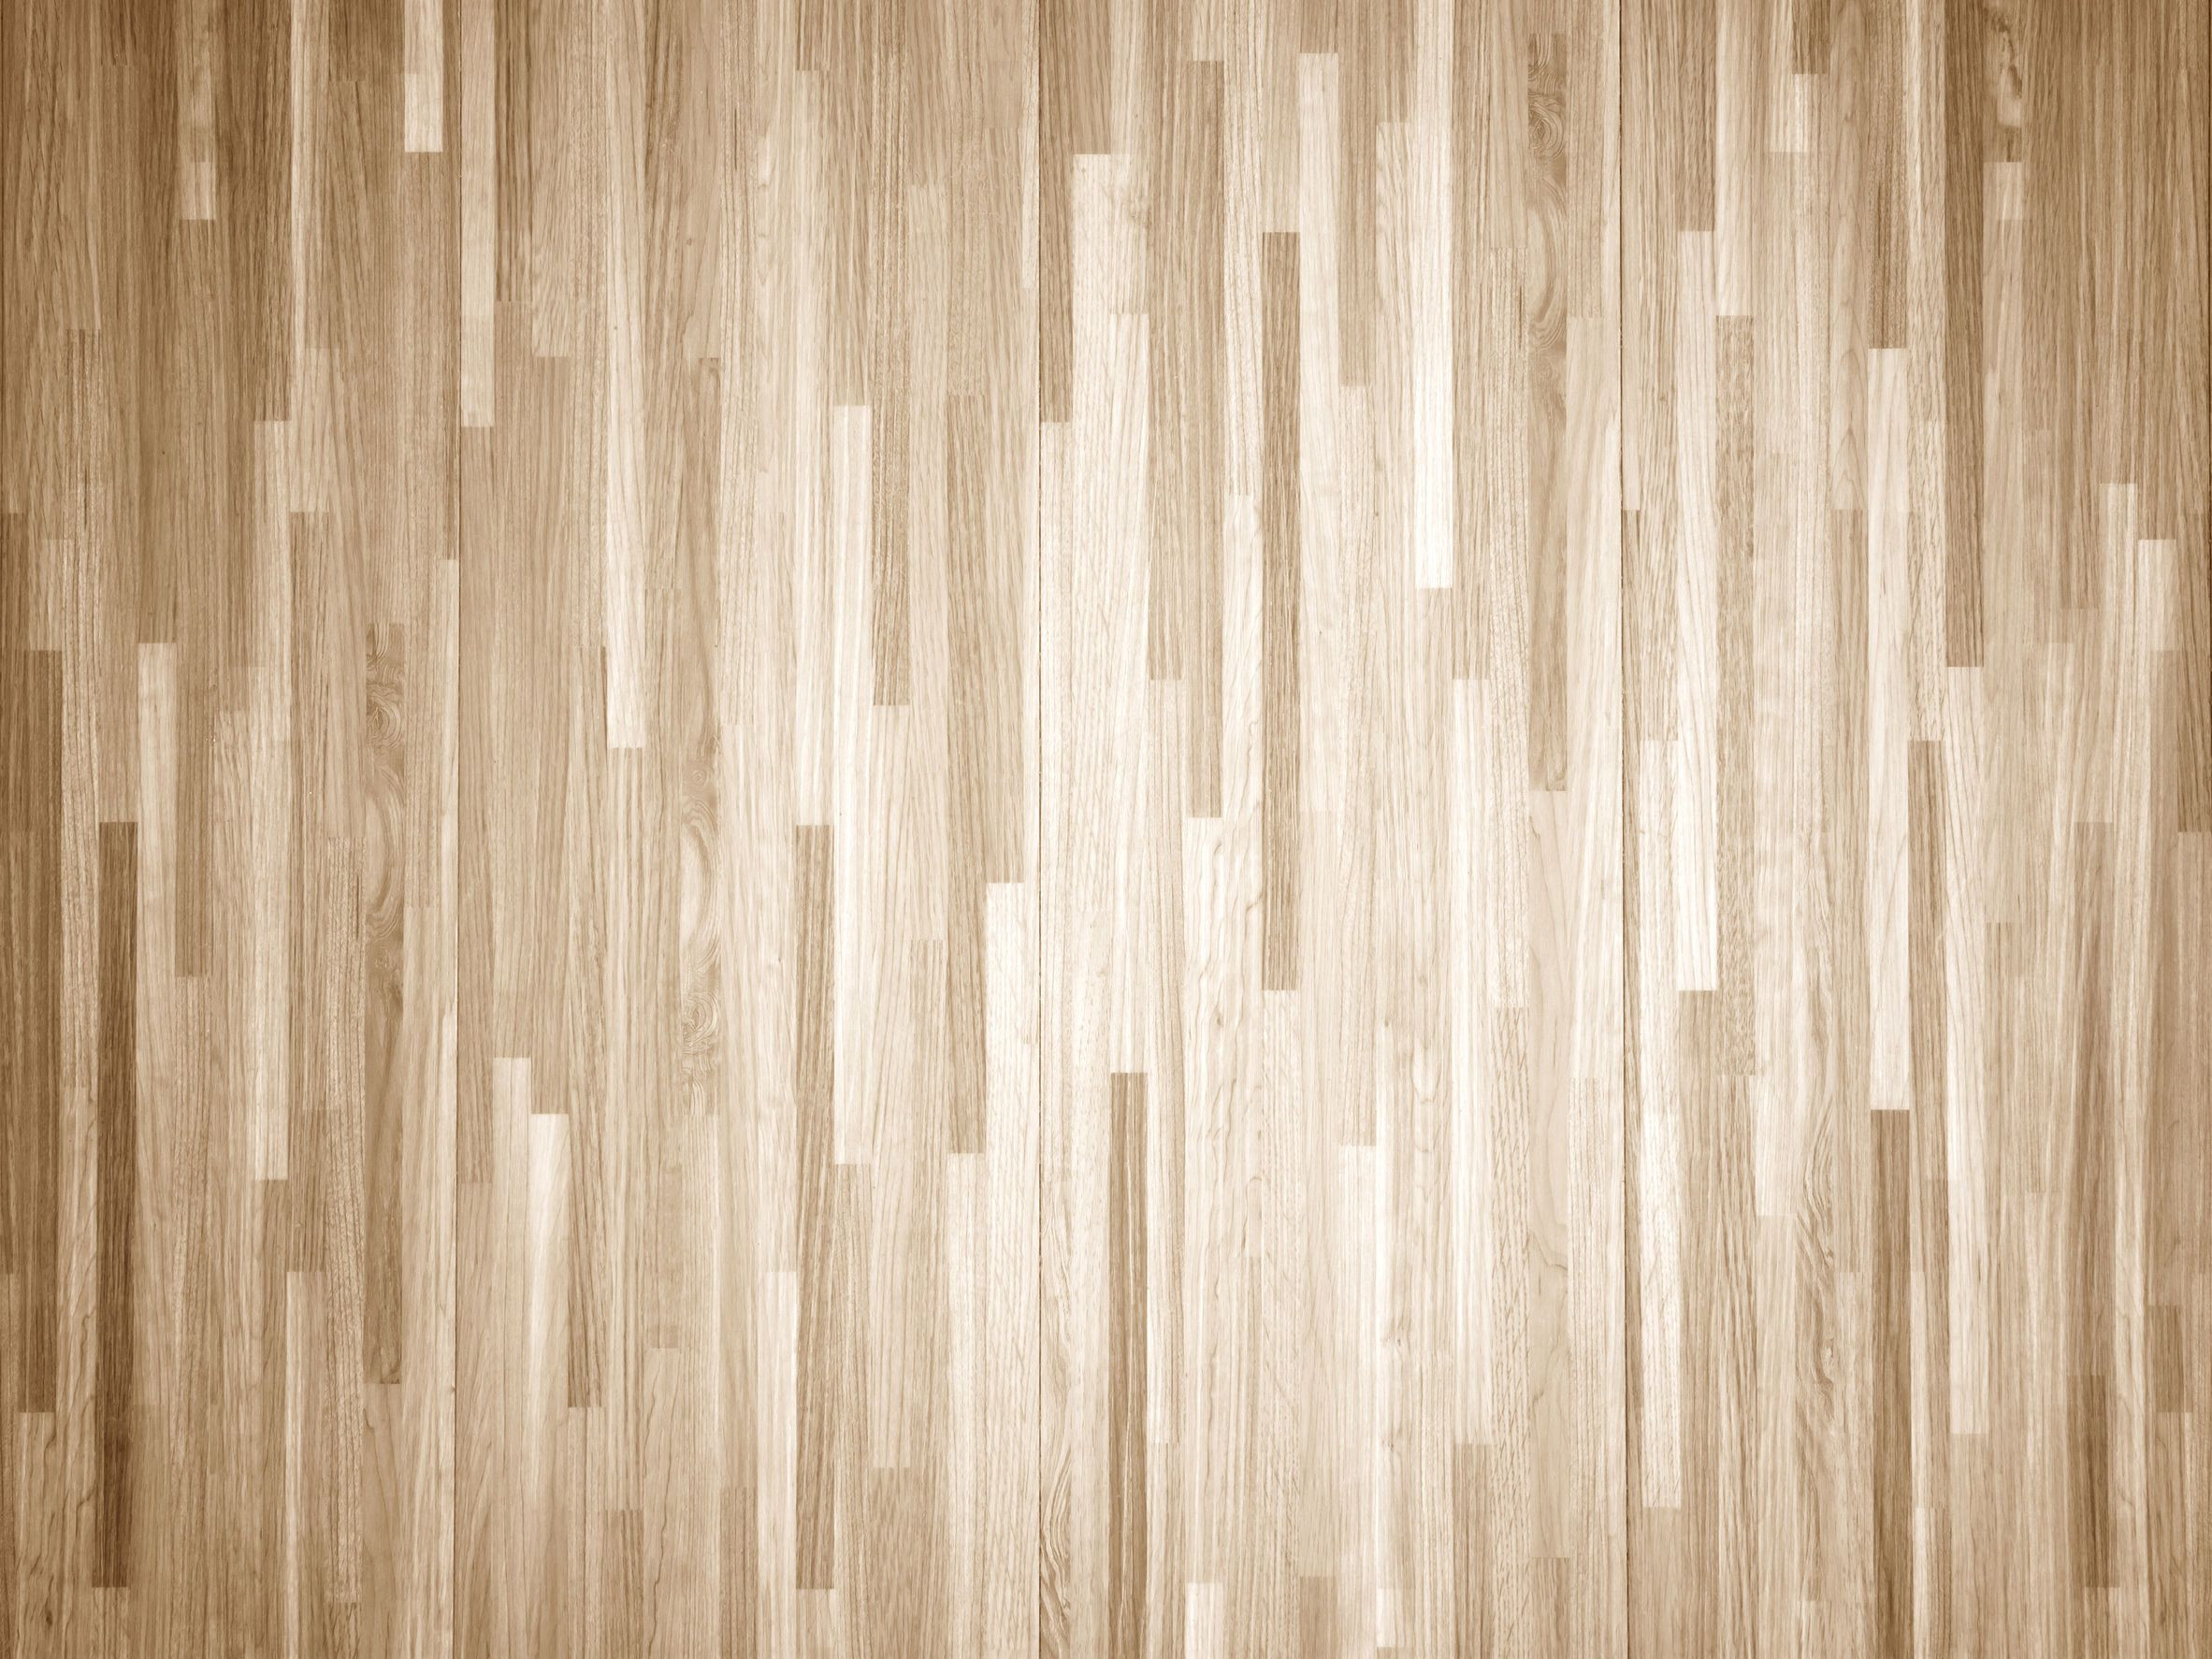 26 Fashionable Hardwood Floor Cleaner that Fills In Scratches 2024 free download hardwood floor cleaner that fills in scratches of how to chemically strip wood floors woodfloordoctor com with regard to you